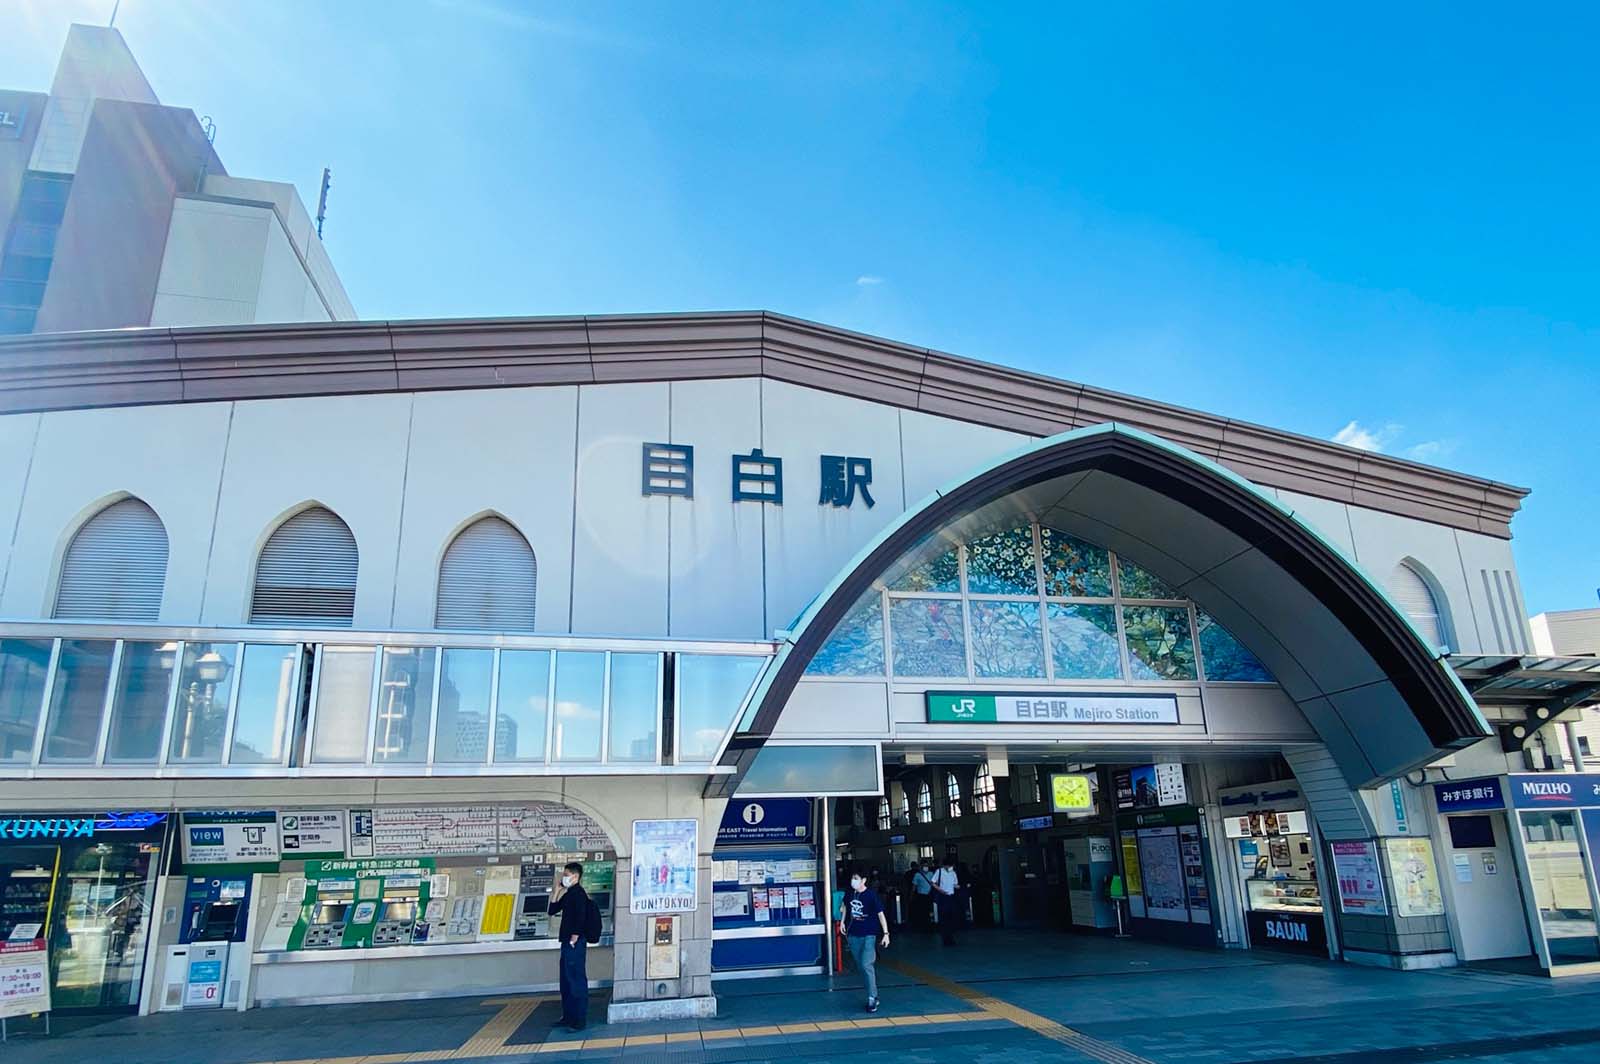 Mejiro station